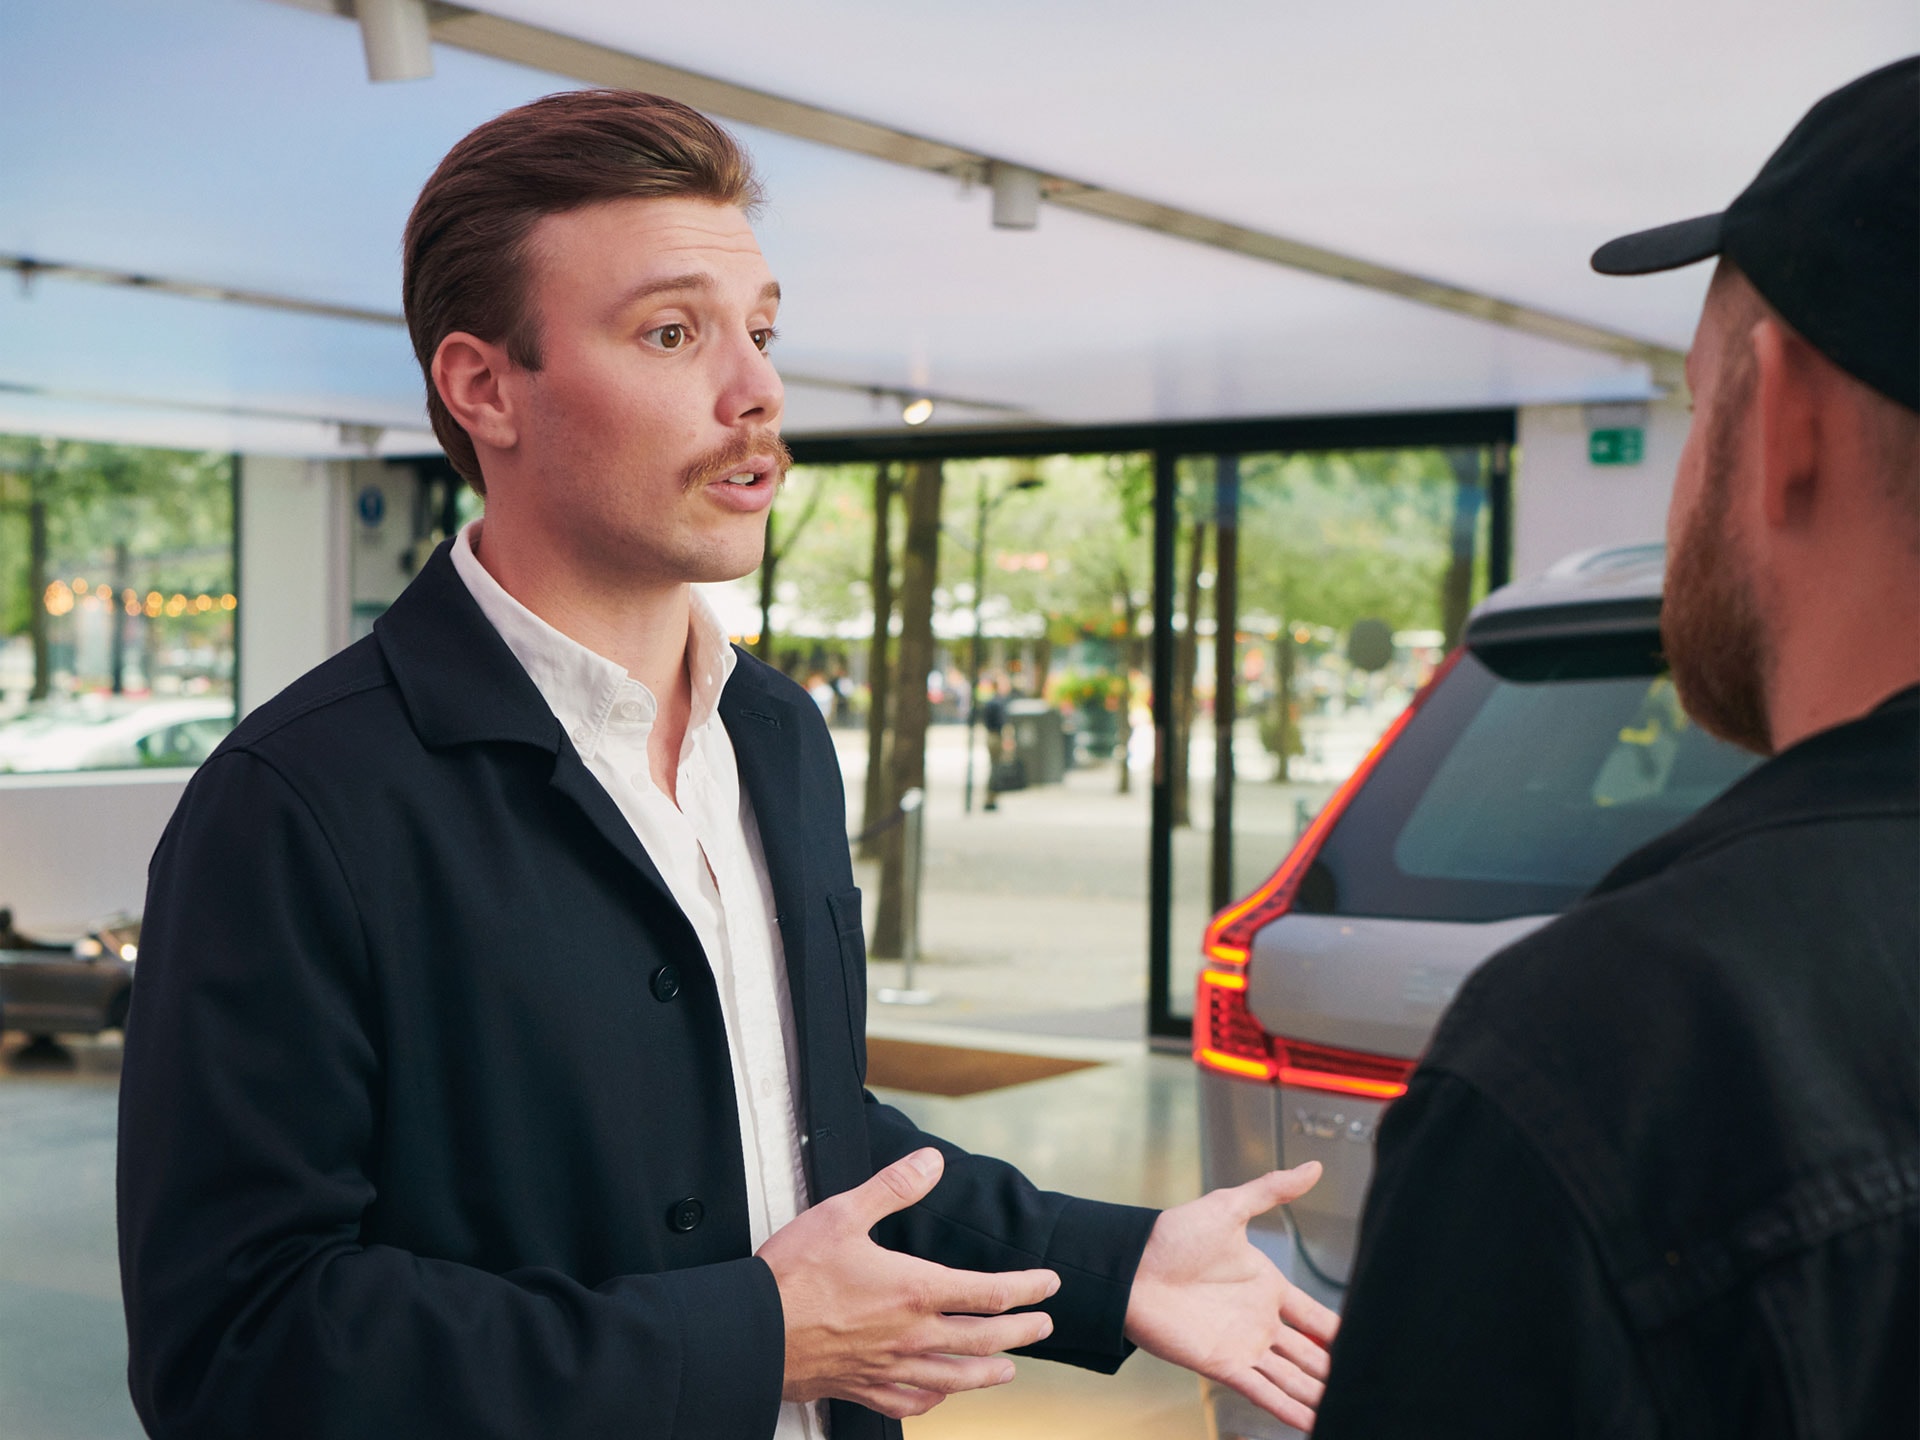 Volvo Studio Stockholms personal pratar med en besökare